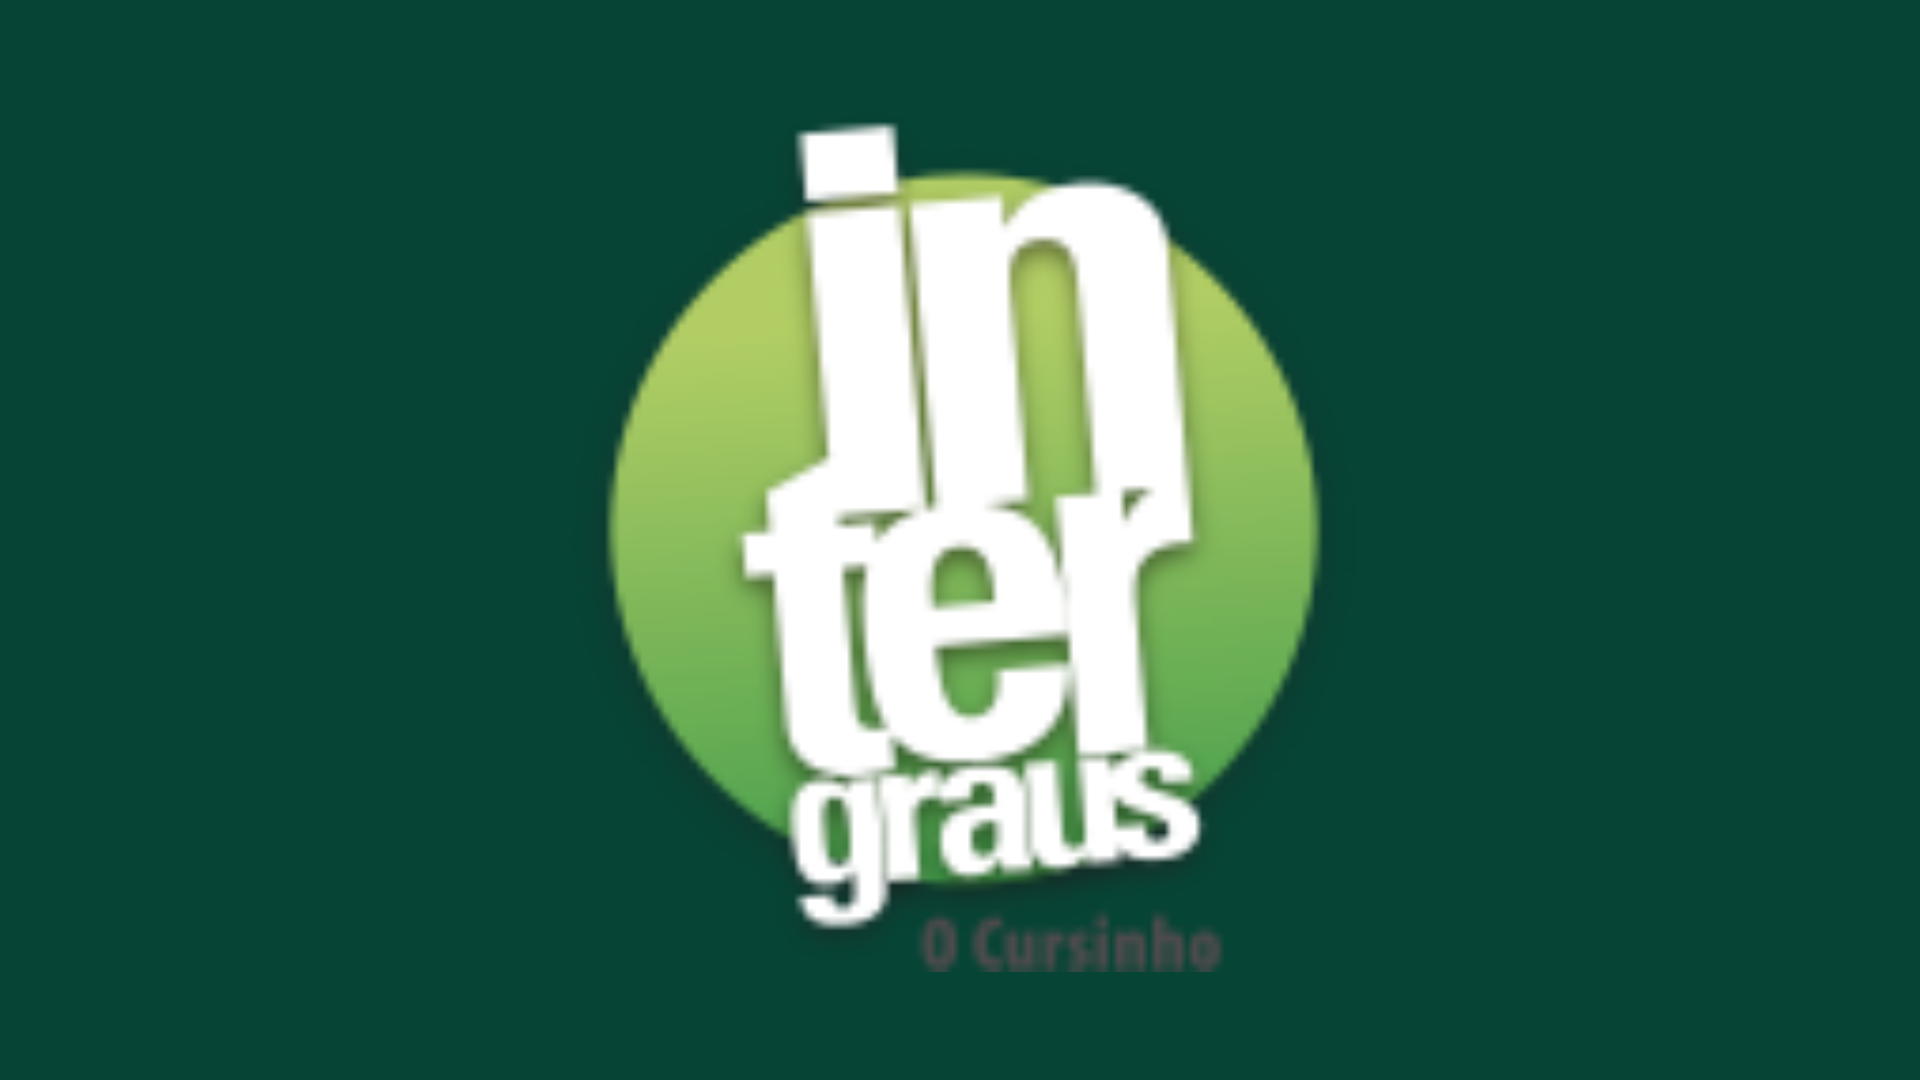 (c) Intergraus.com.br